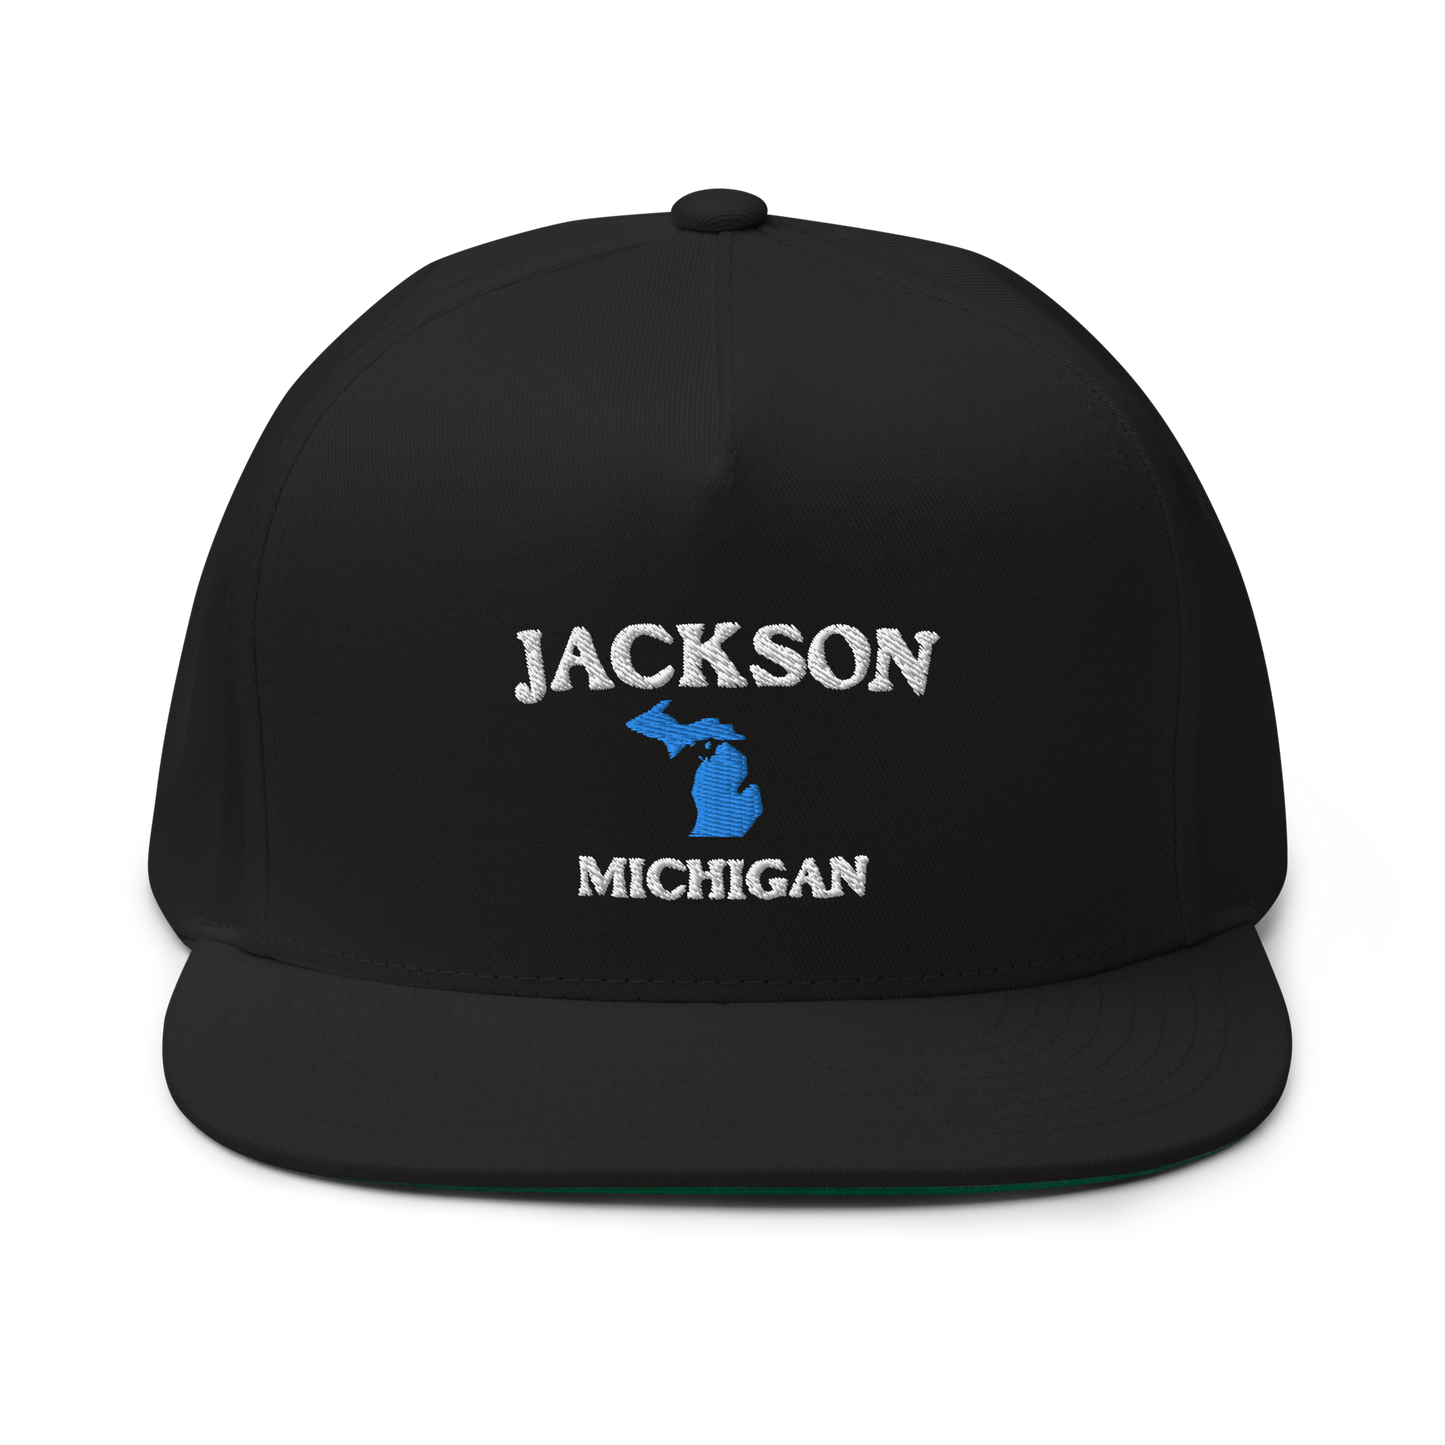 'Jackson Michigan' Flat Bill Snapback (w/ Michigan Outline)